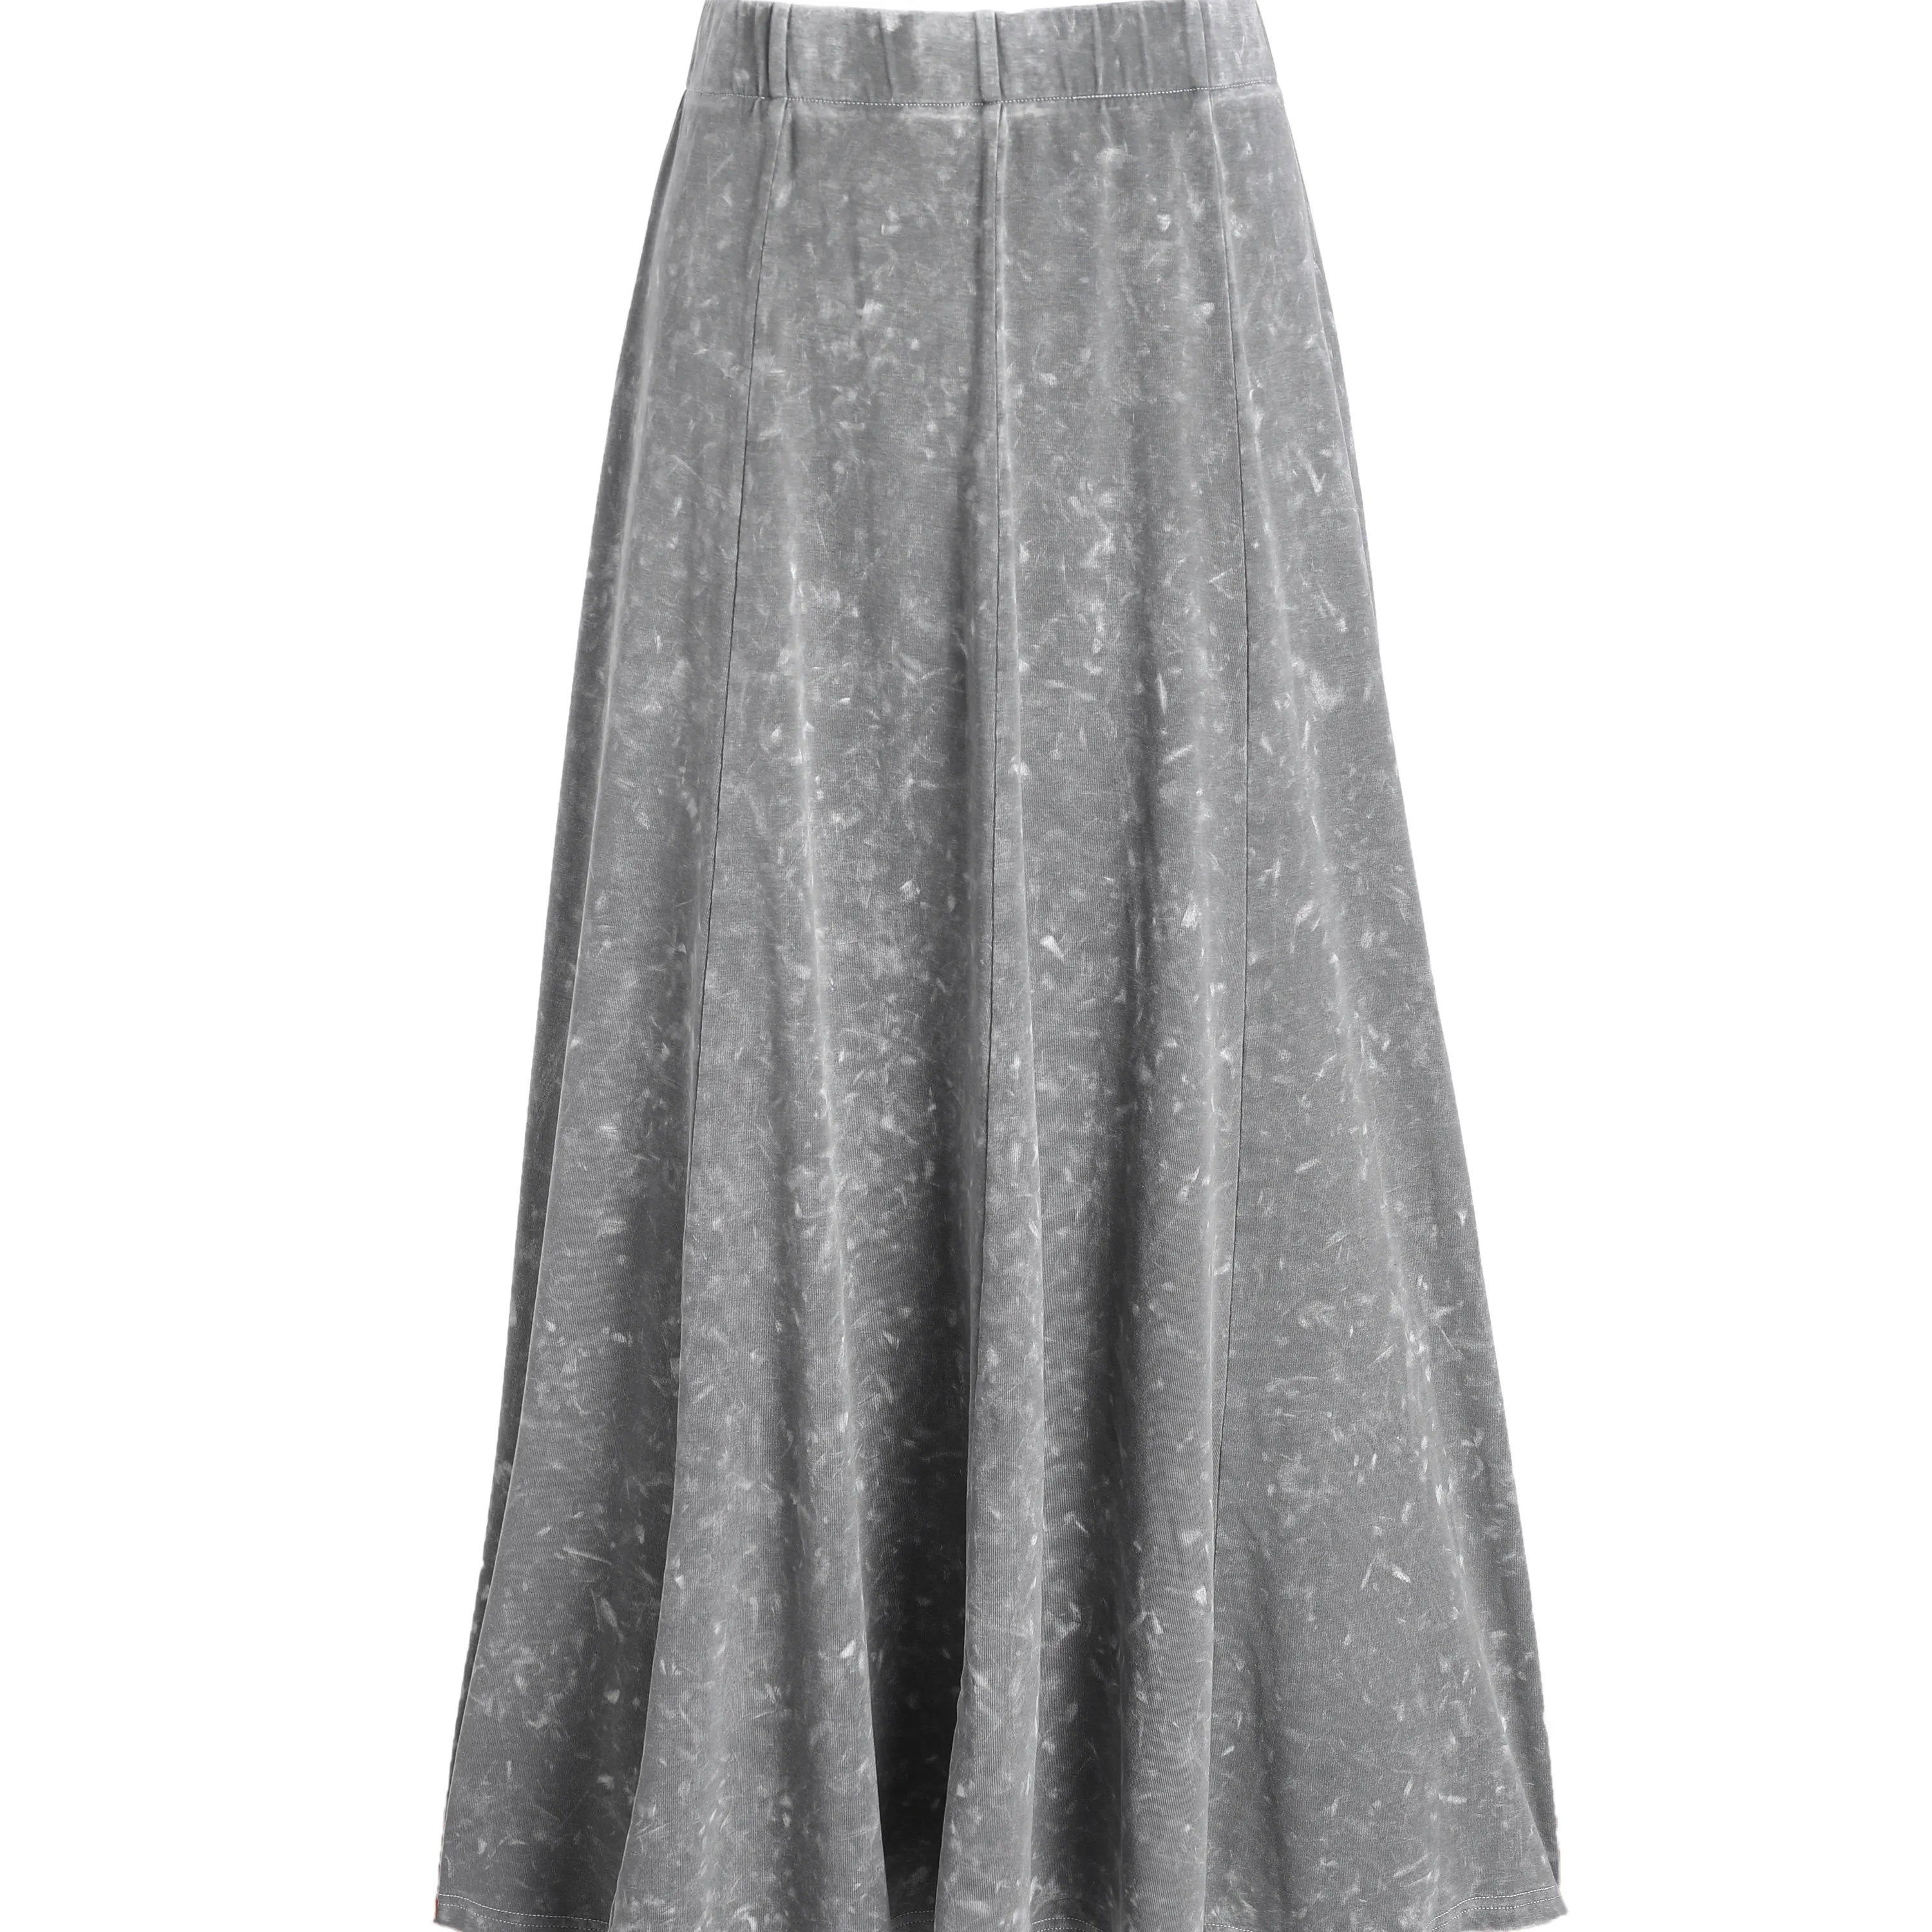 Oem&odm Women's Clothes Manufacturer A Line High Waist Elasticated Waistband Curved Stretch Knit Midi Skirt